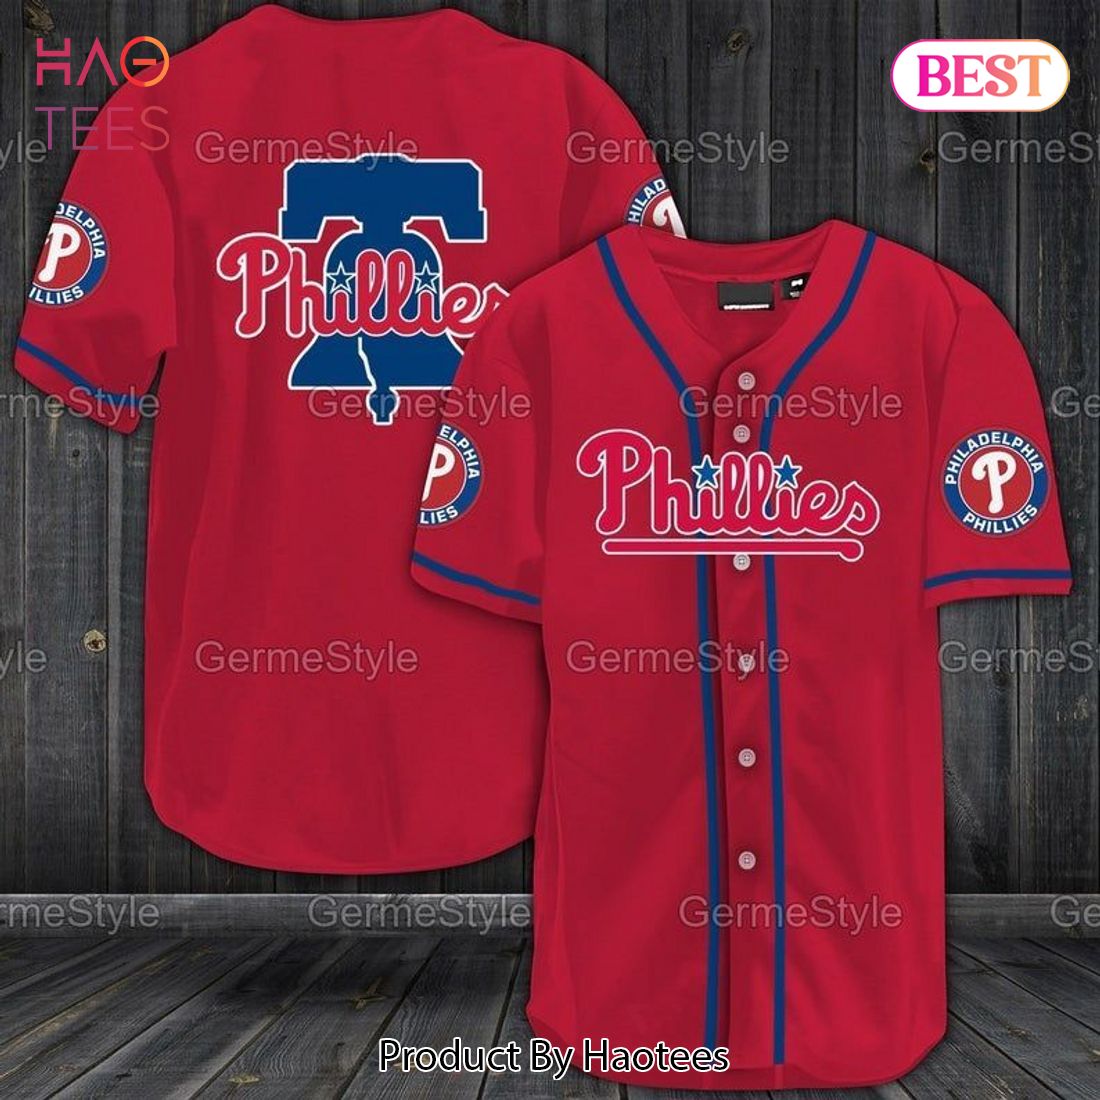 Official Philadelphia Phillies Jerseys, Phillies Baseball Jerseys, Uniforms